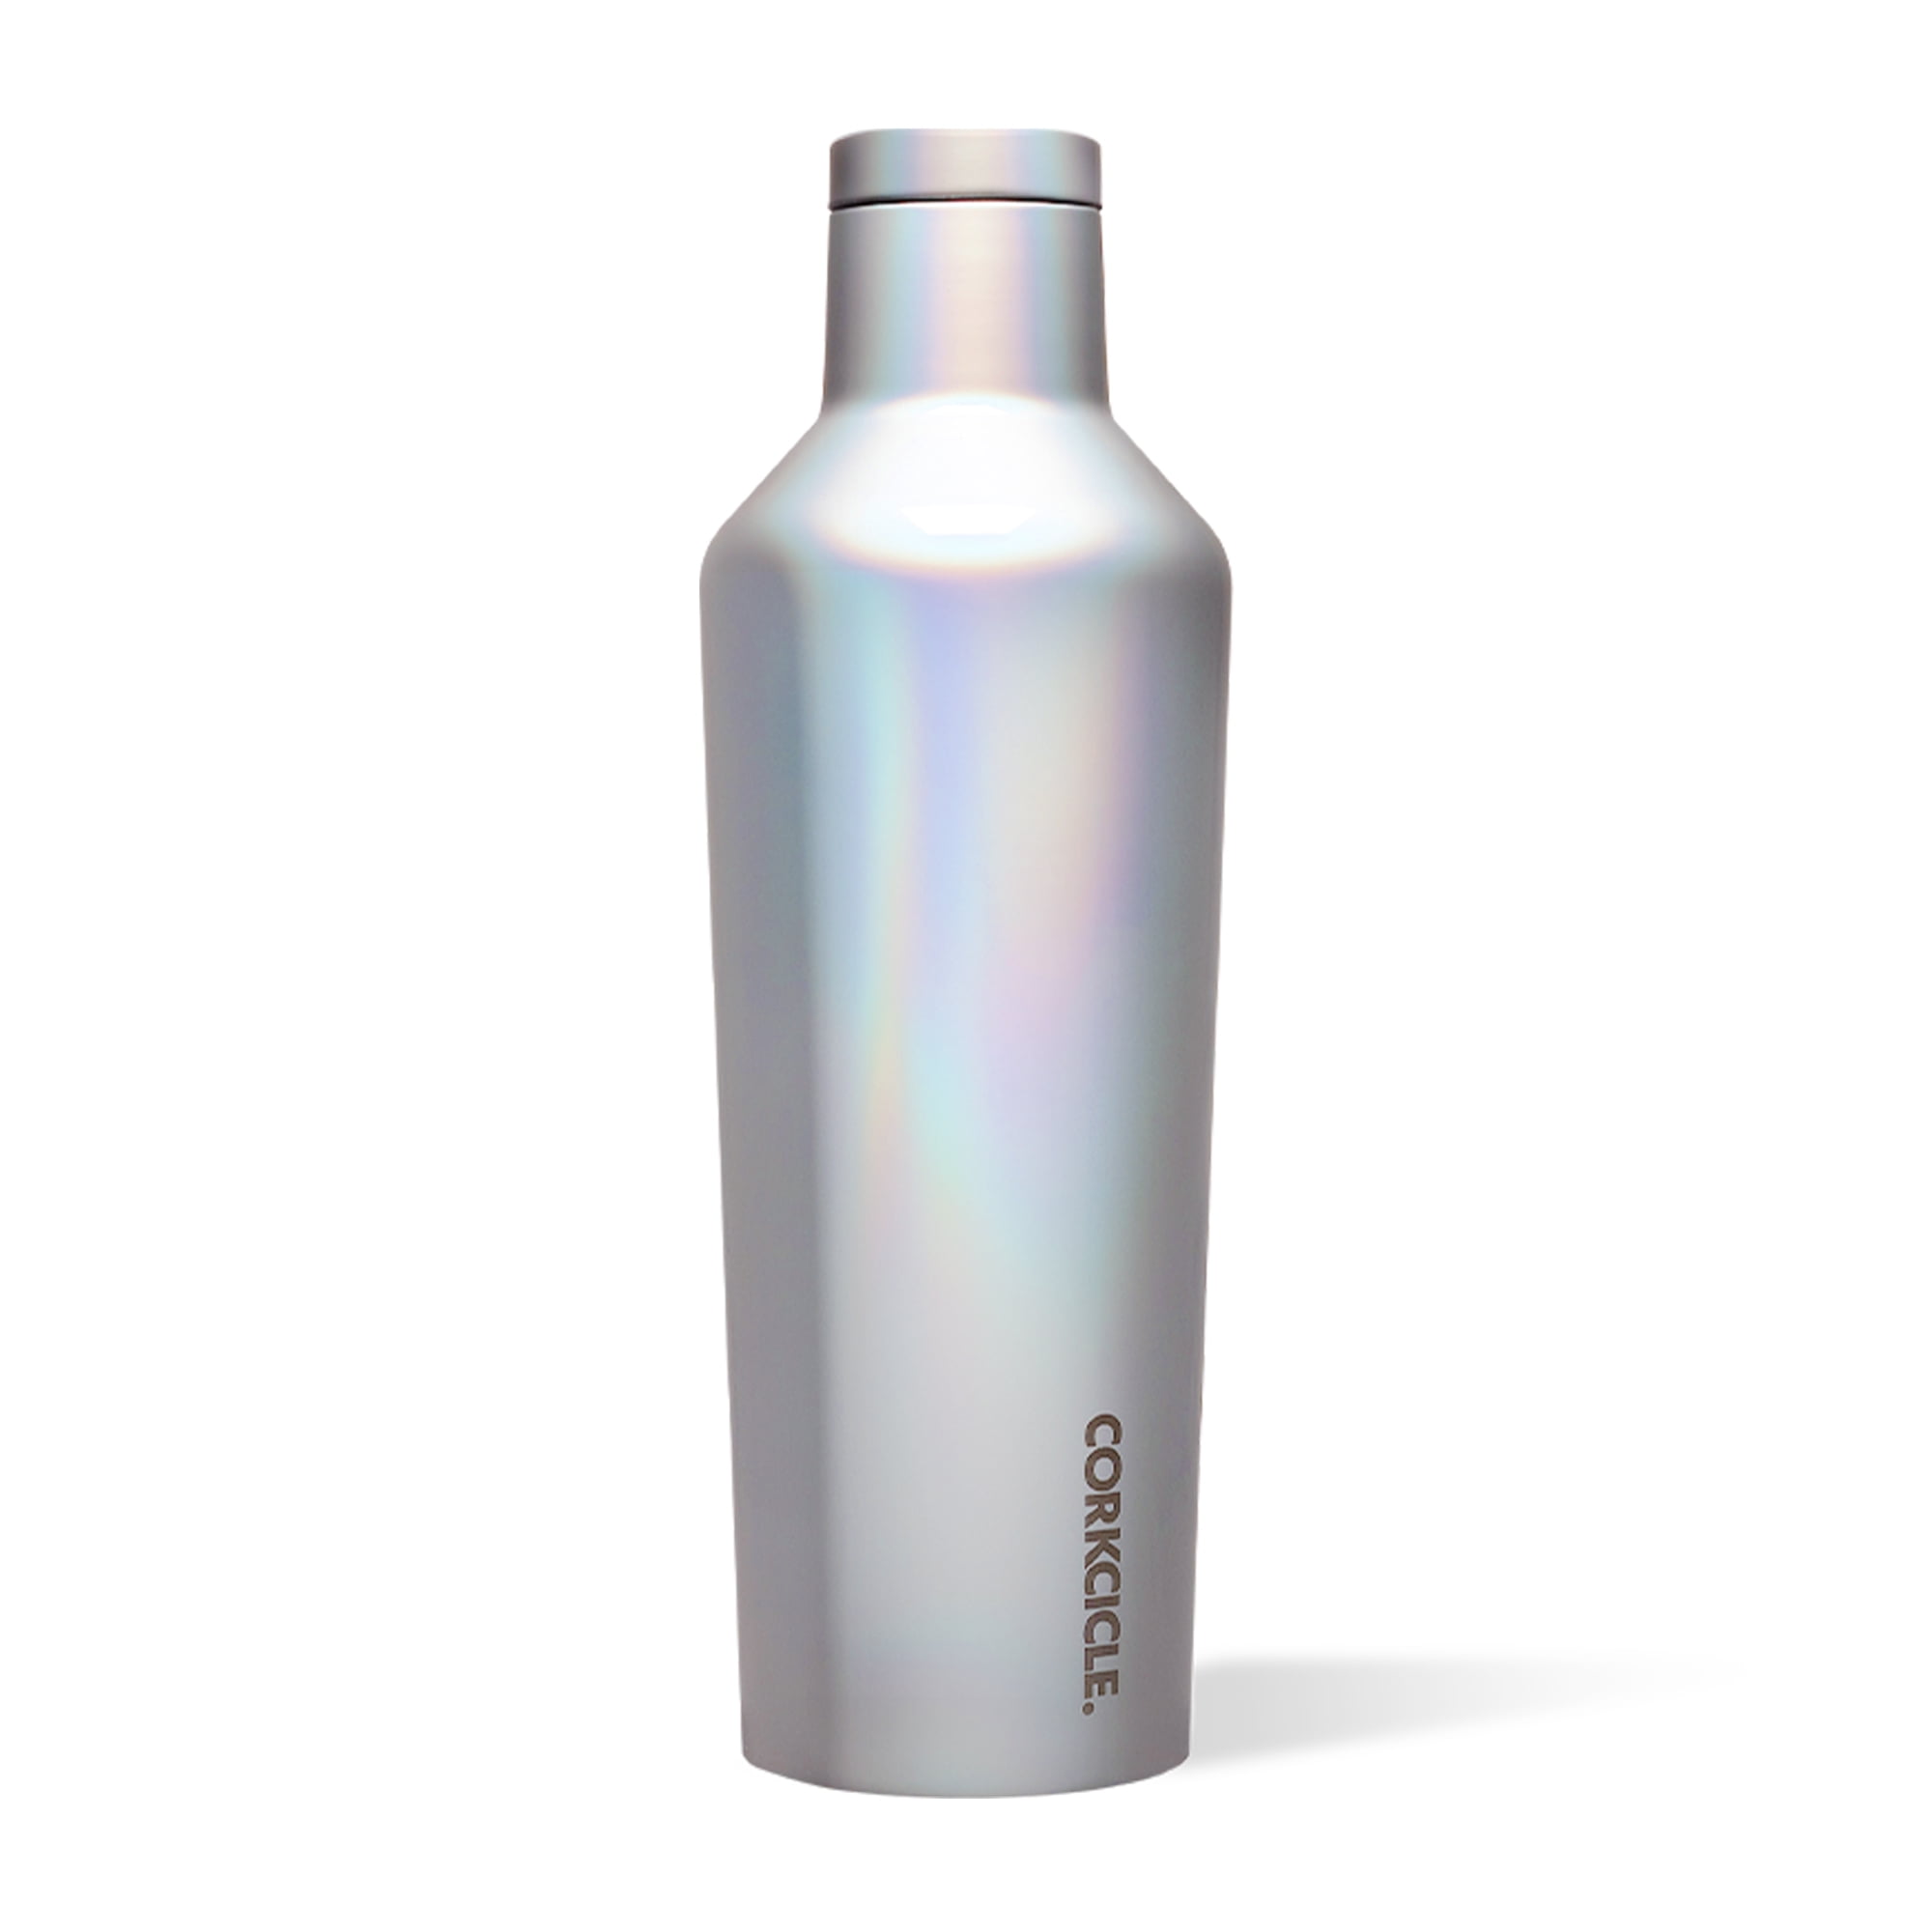 16 oz Stainless Steel Keeper Bottle – Rustic Strength